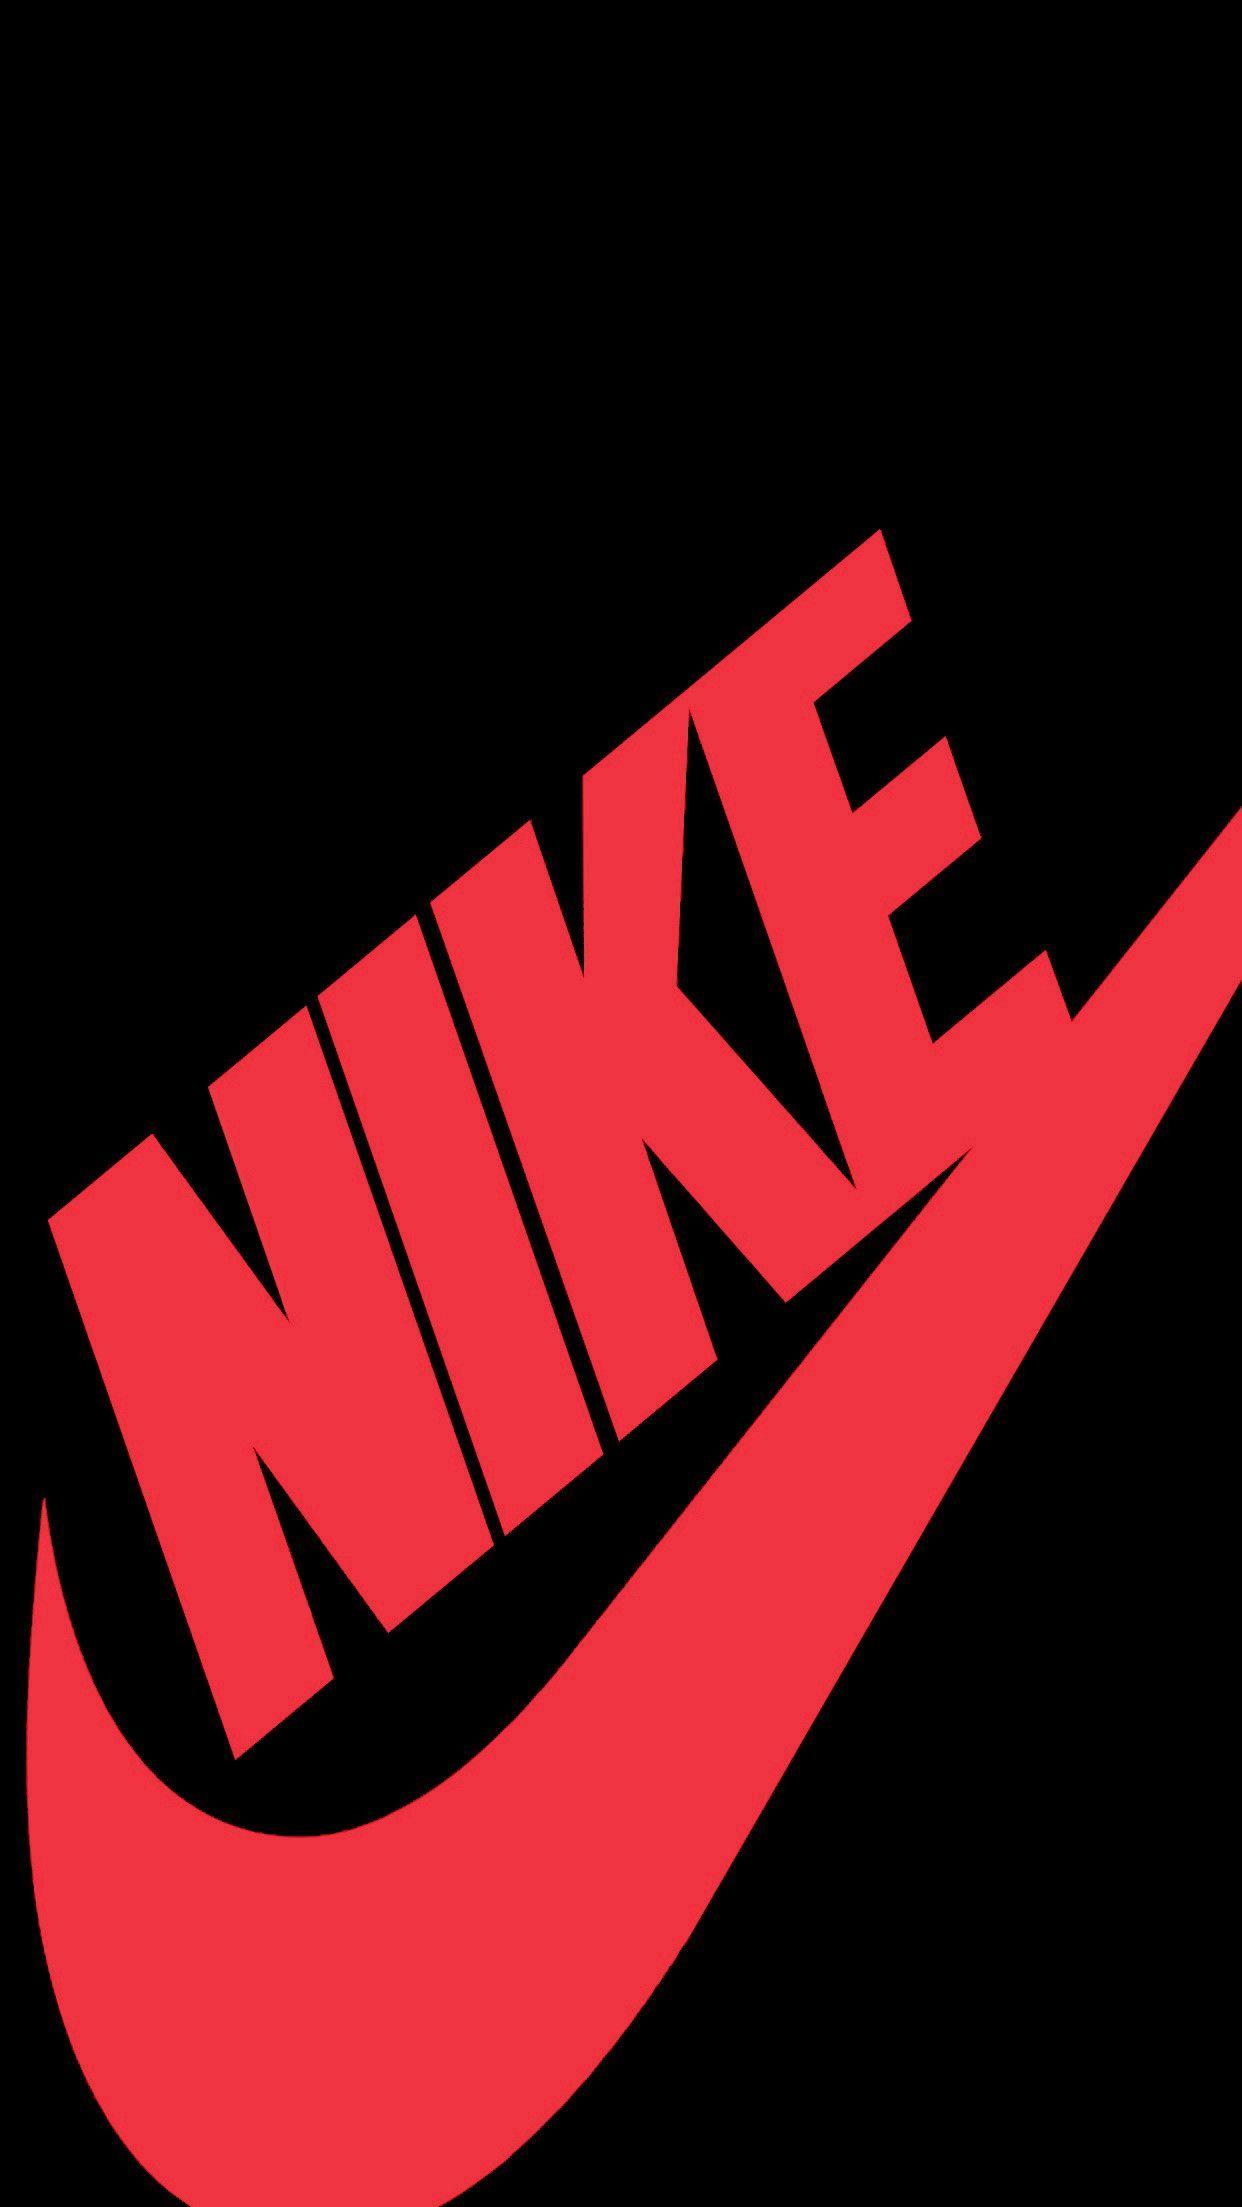 Drippy nike wallpaper larmoriccom Nike wallpaper Nike logo